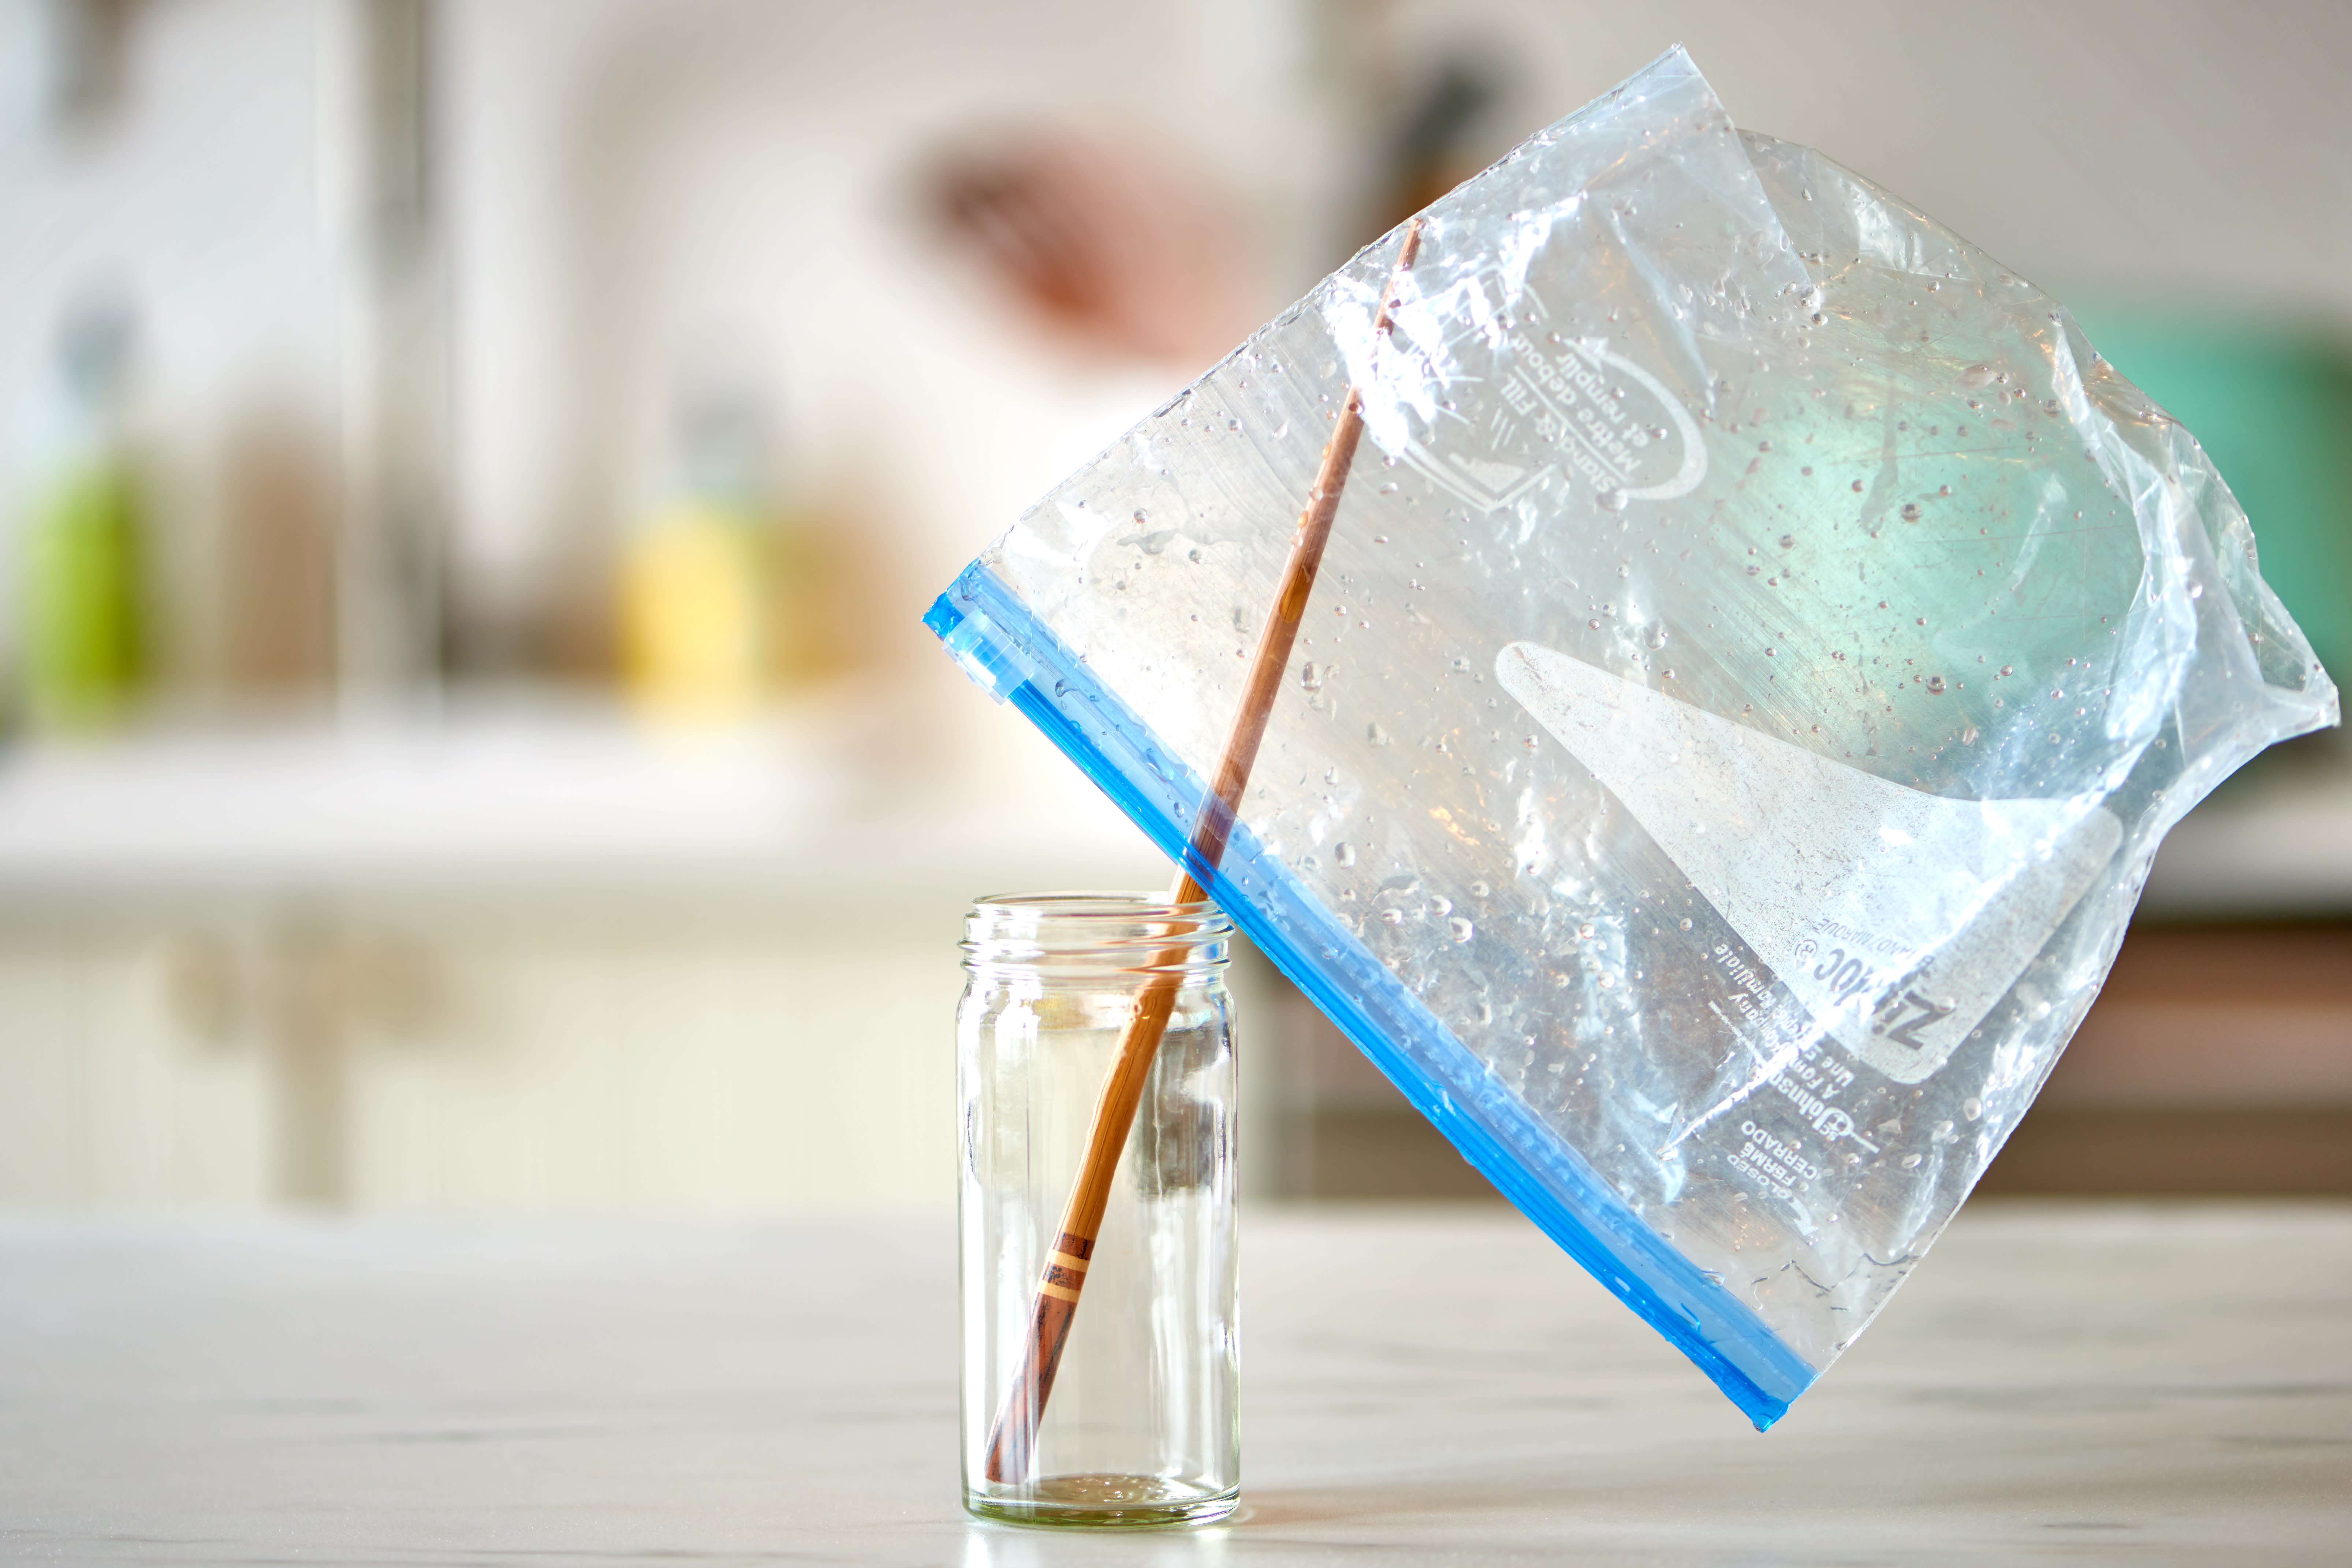 Does rewashing Ziploc bags really save money? 